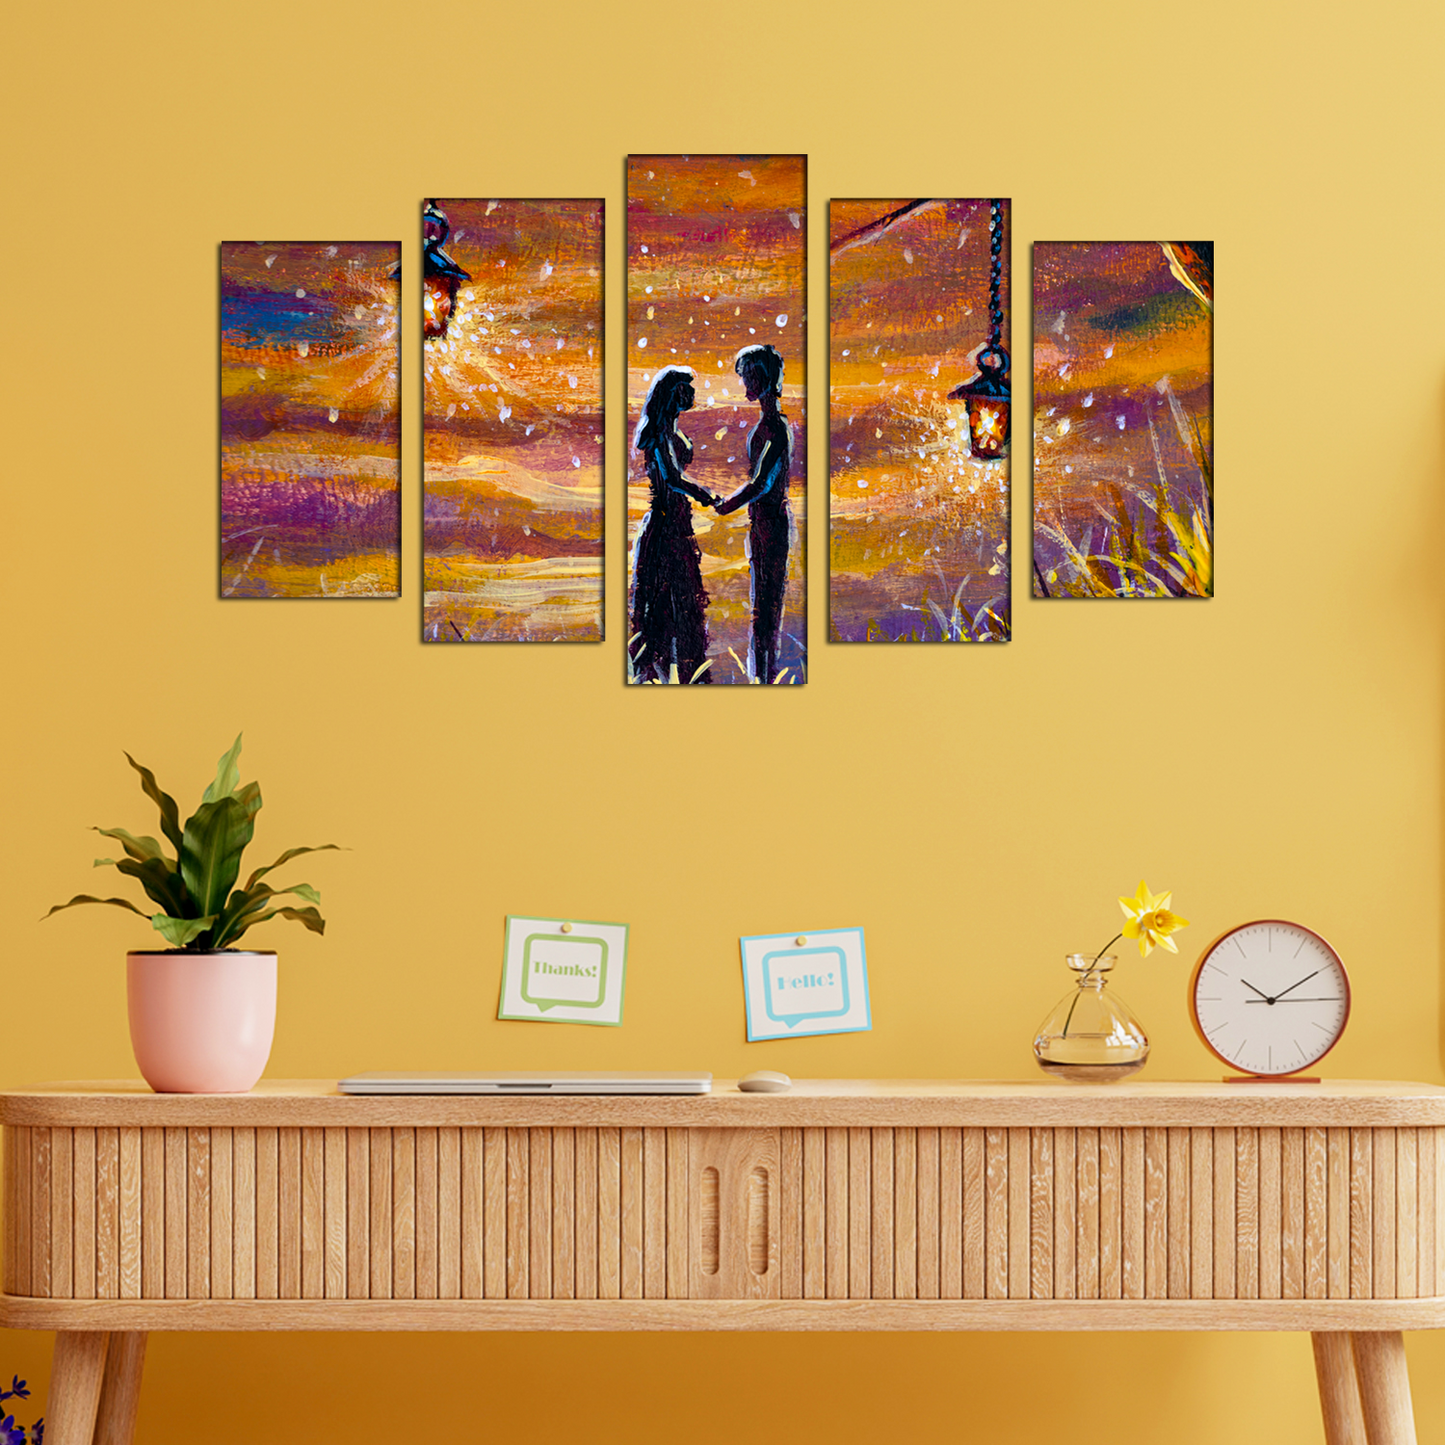 Beautiful Couple With Lantern MDF Wall Panel Painting